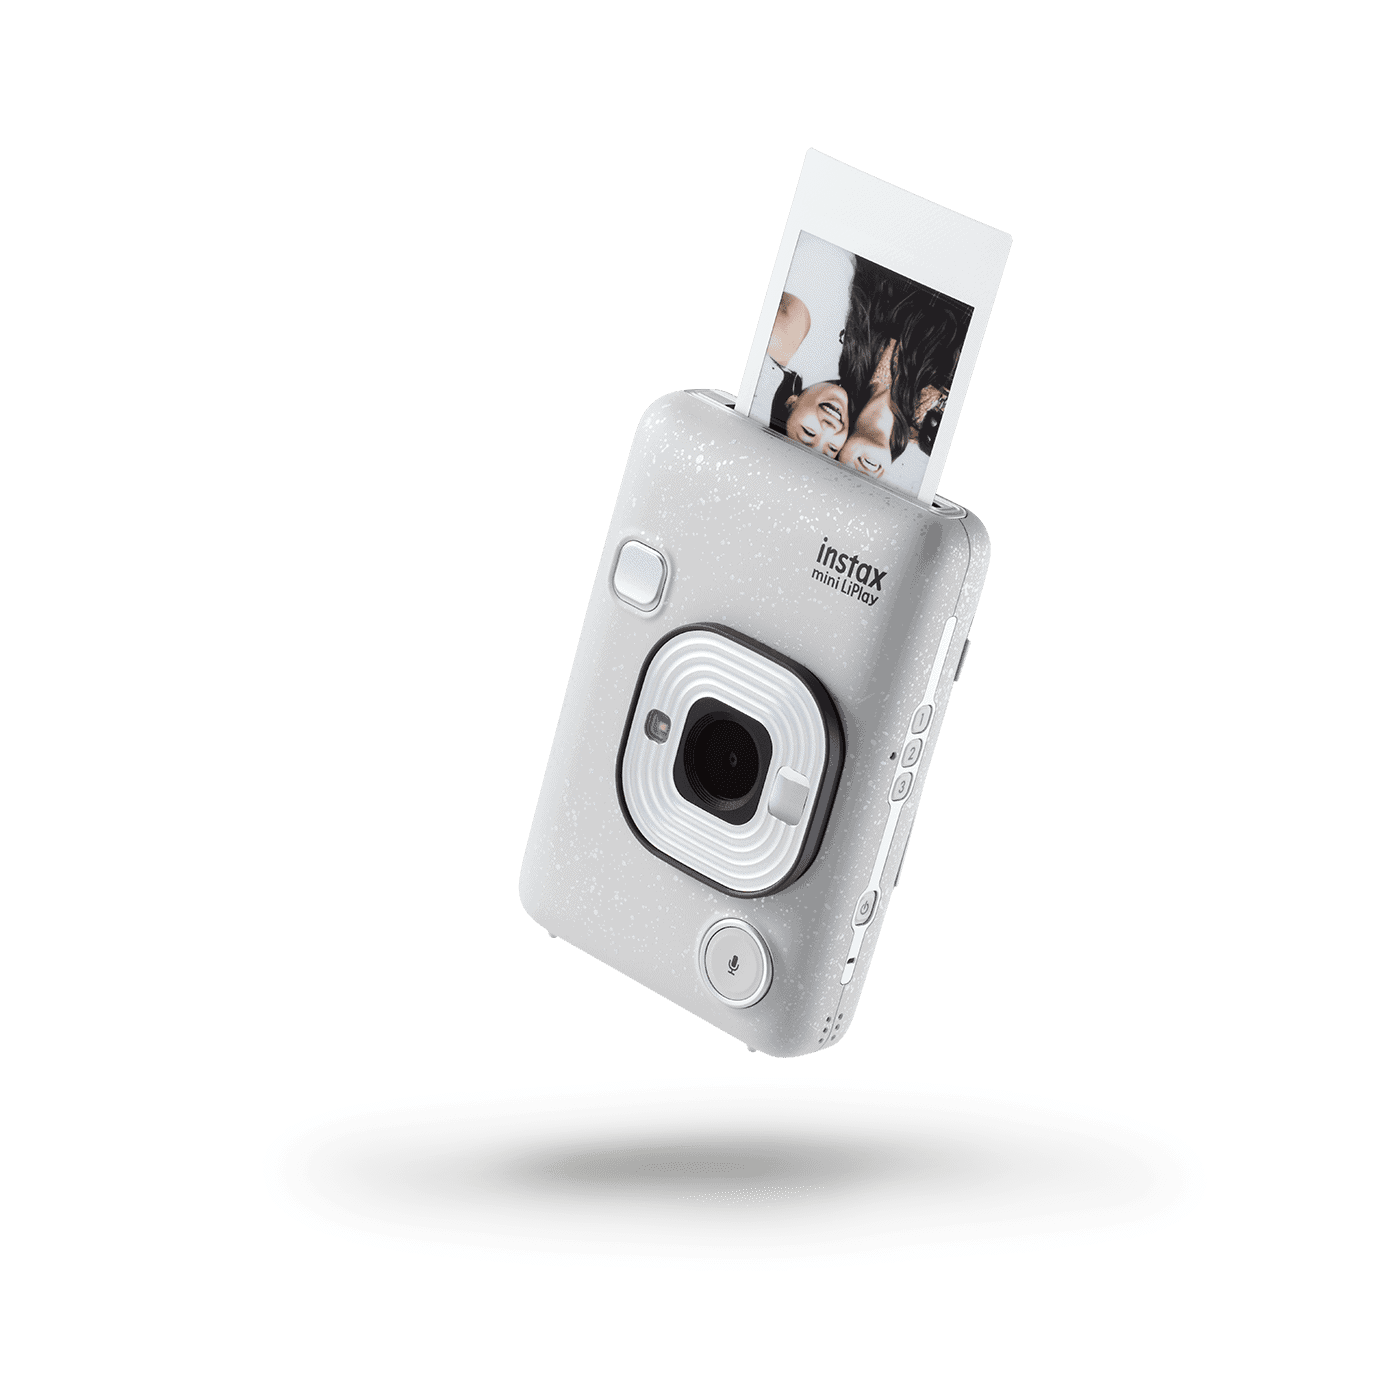 Mini LiPlay Digital Camera by instax | Instant Digital Camera